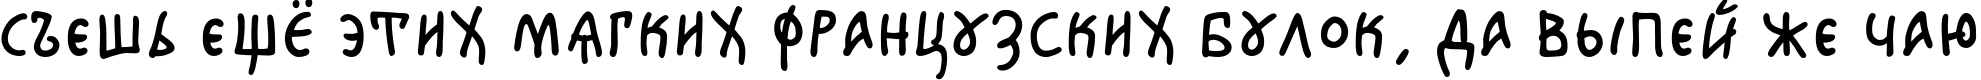 Пример написания шрифтом Agafia текста на русском